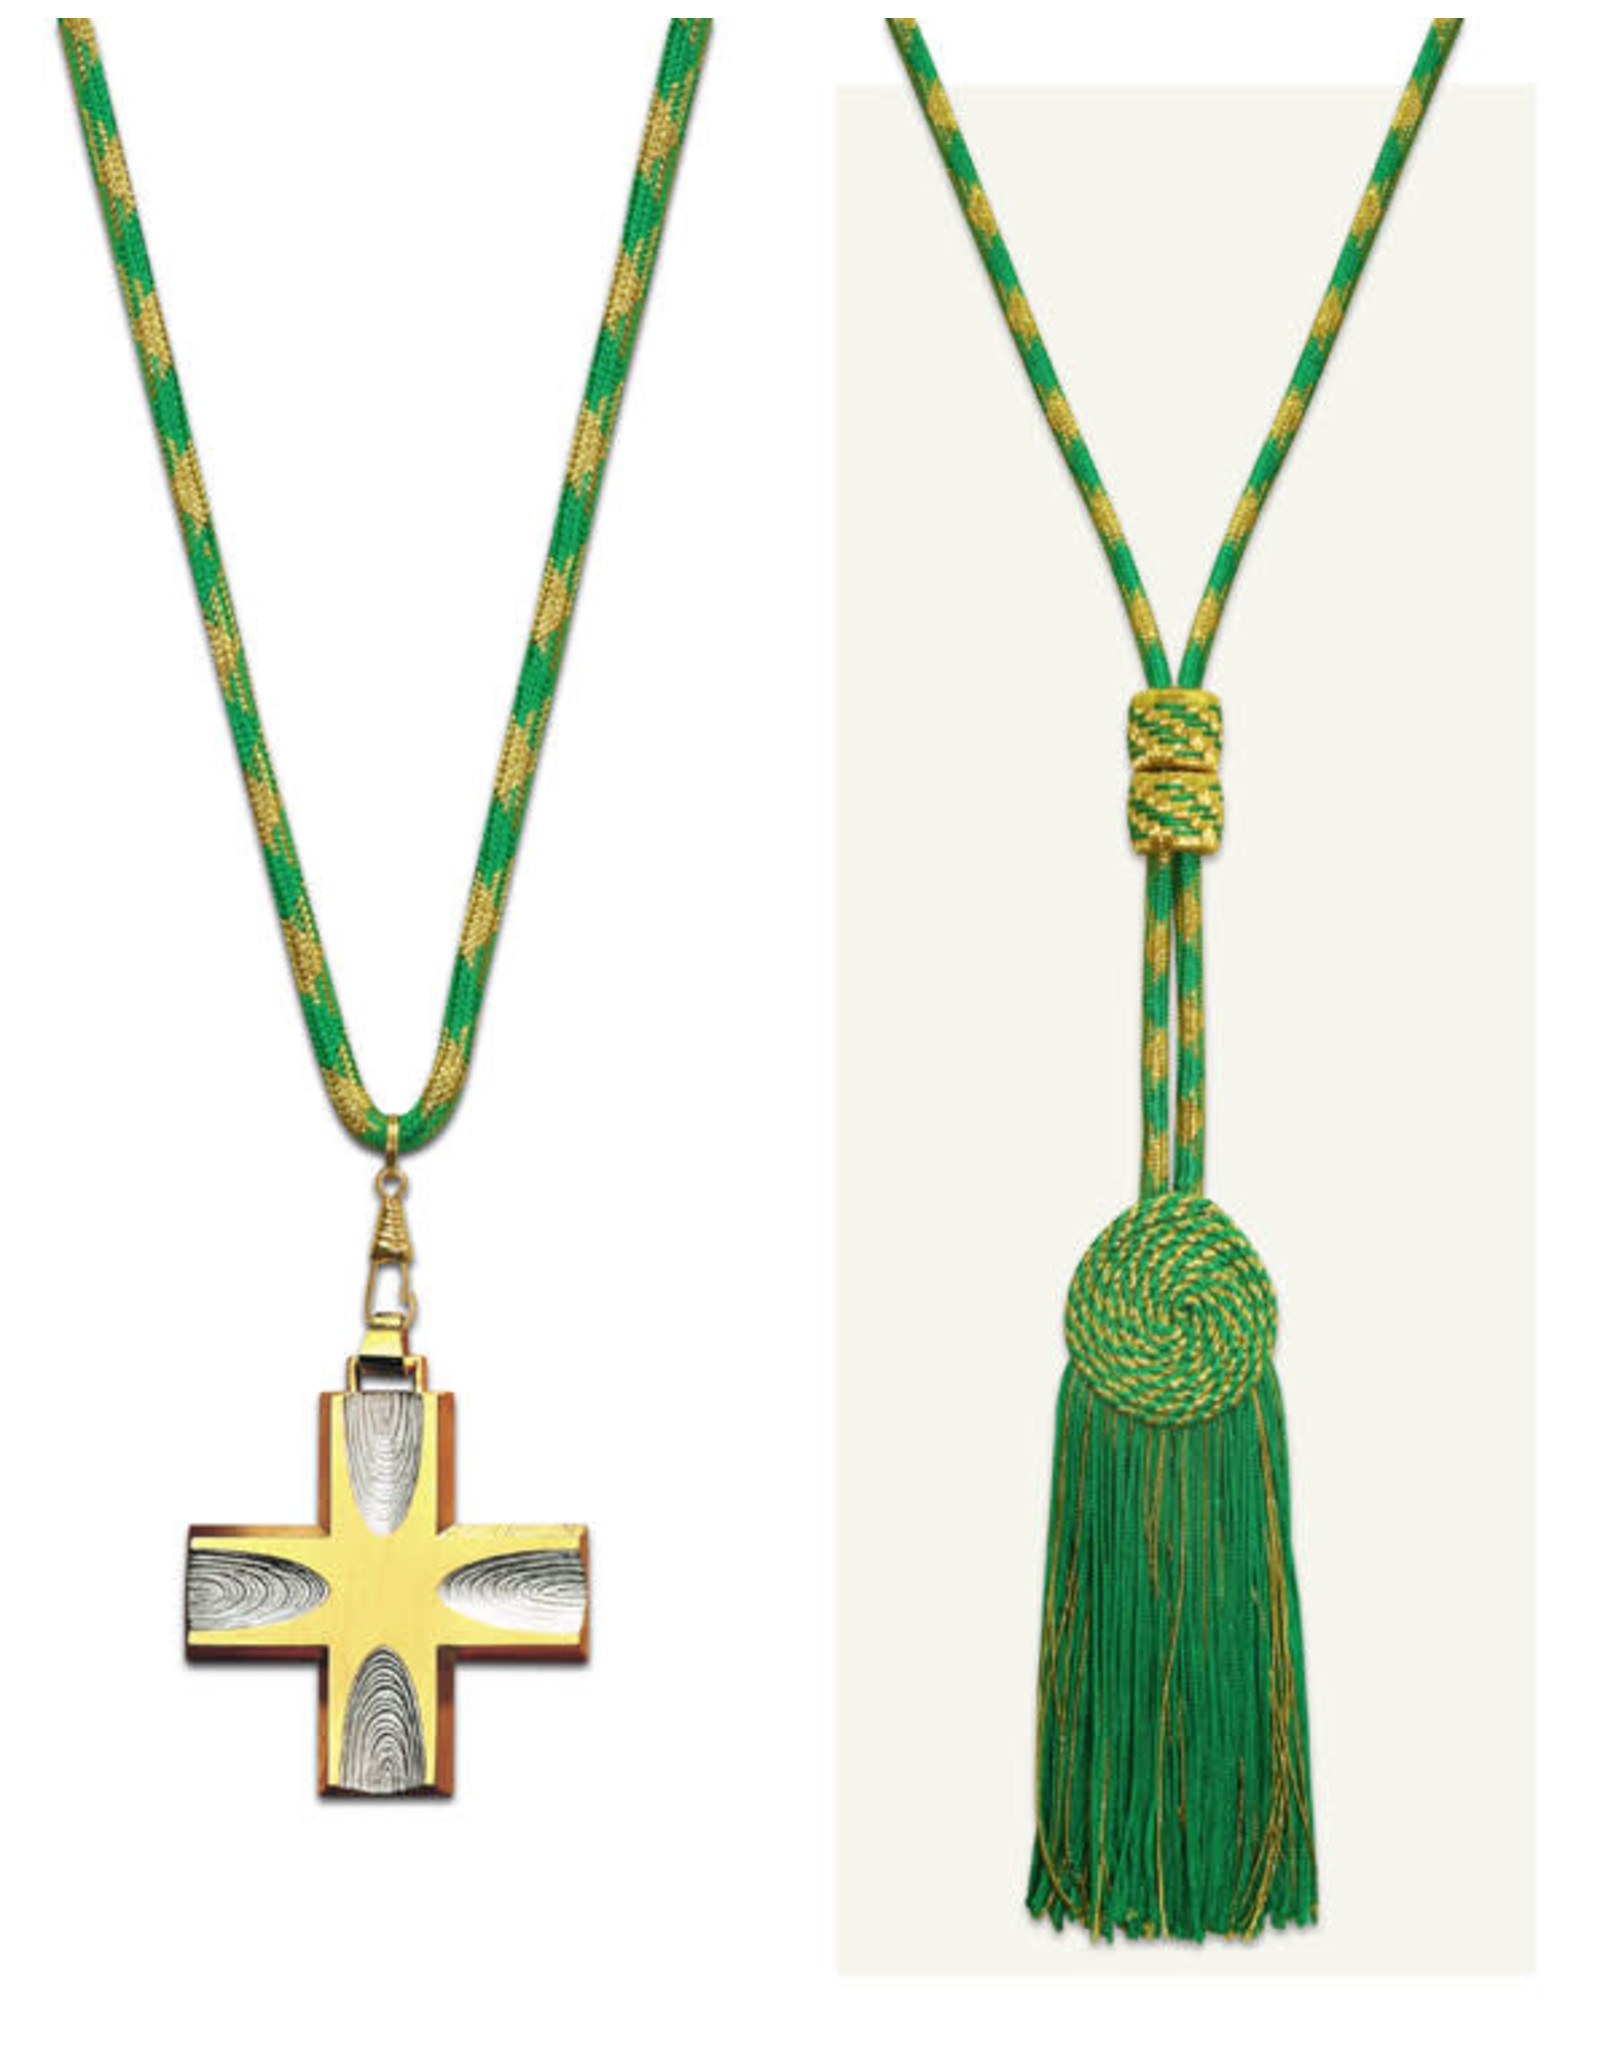 Slabbinck Cord/Tassel - Green/Gold - for Pectoral Cross